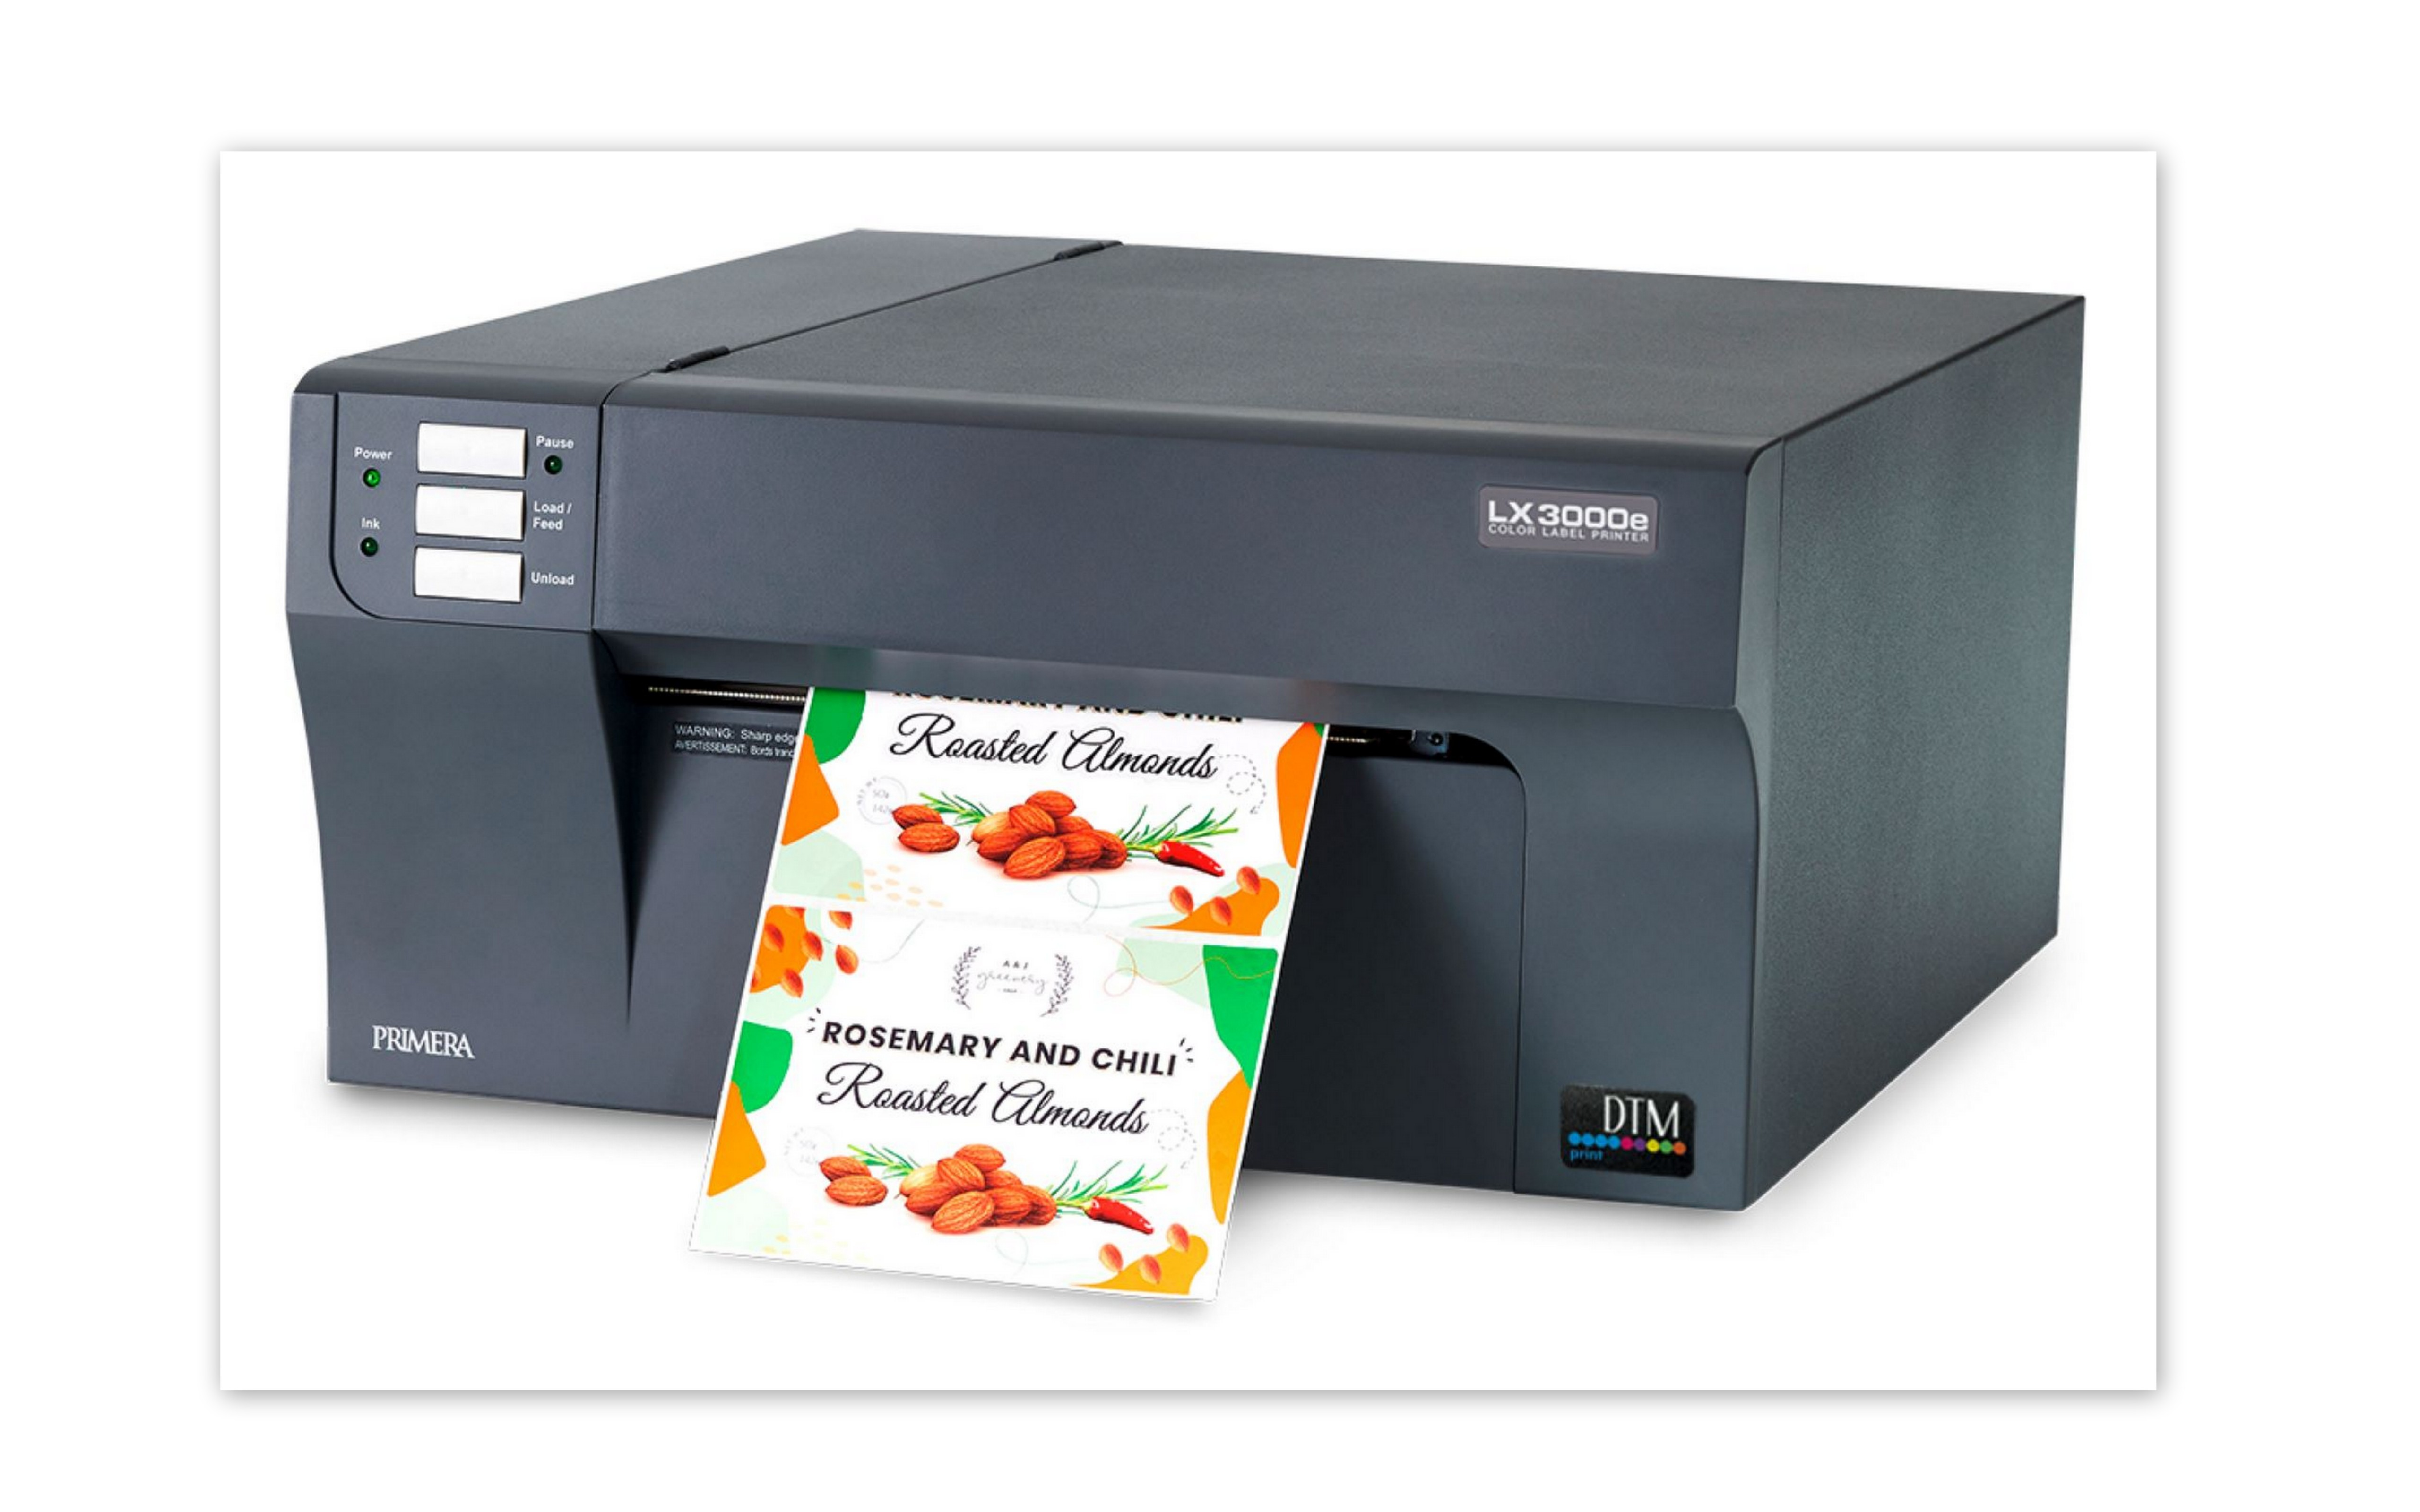 drei LX3000e Color Label Netzwerkfähig Pigment Tintentanks(CMY) WLAN Printer separaten Pigment-basierte DTM PRINT mit Label Printer Inkjet Vollfarb-Drucktechnologie